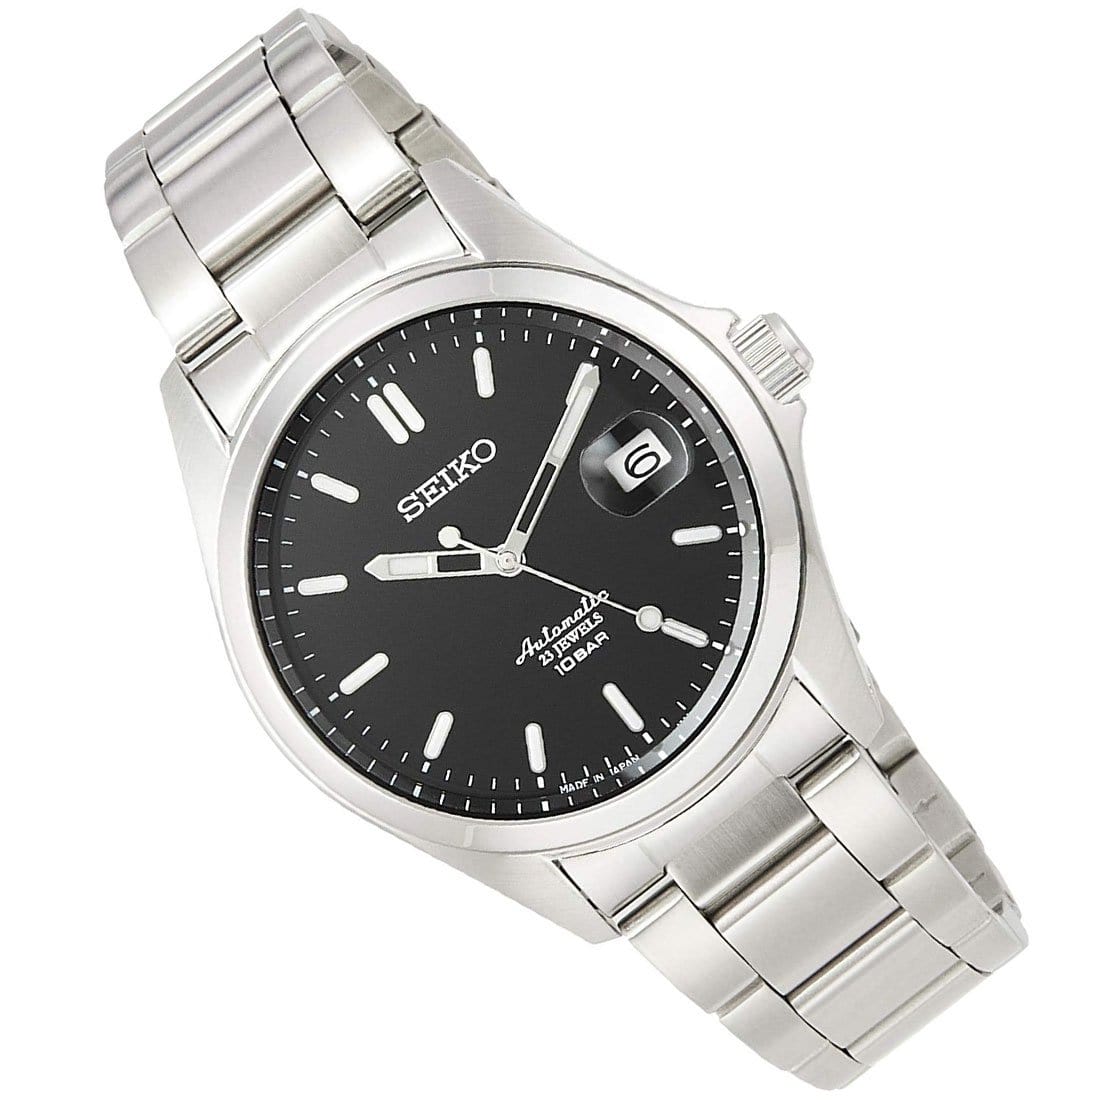 SZSB015 SZSB015J Seiko Classic Automatic JDM Watch (Avail March 31)